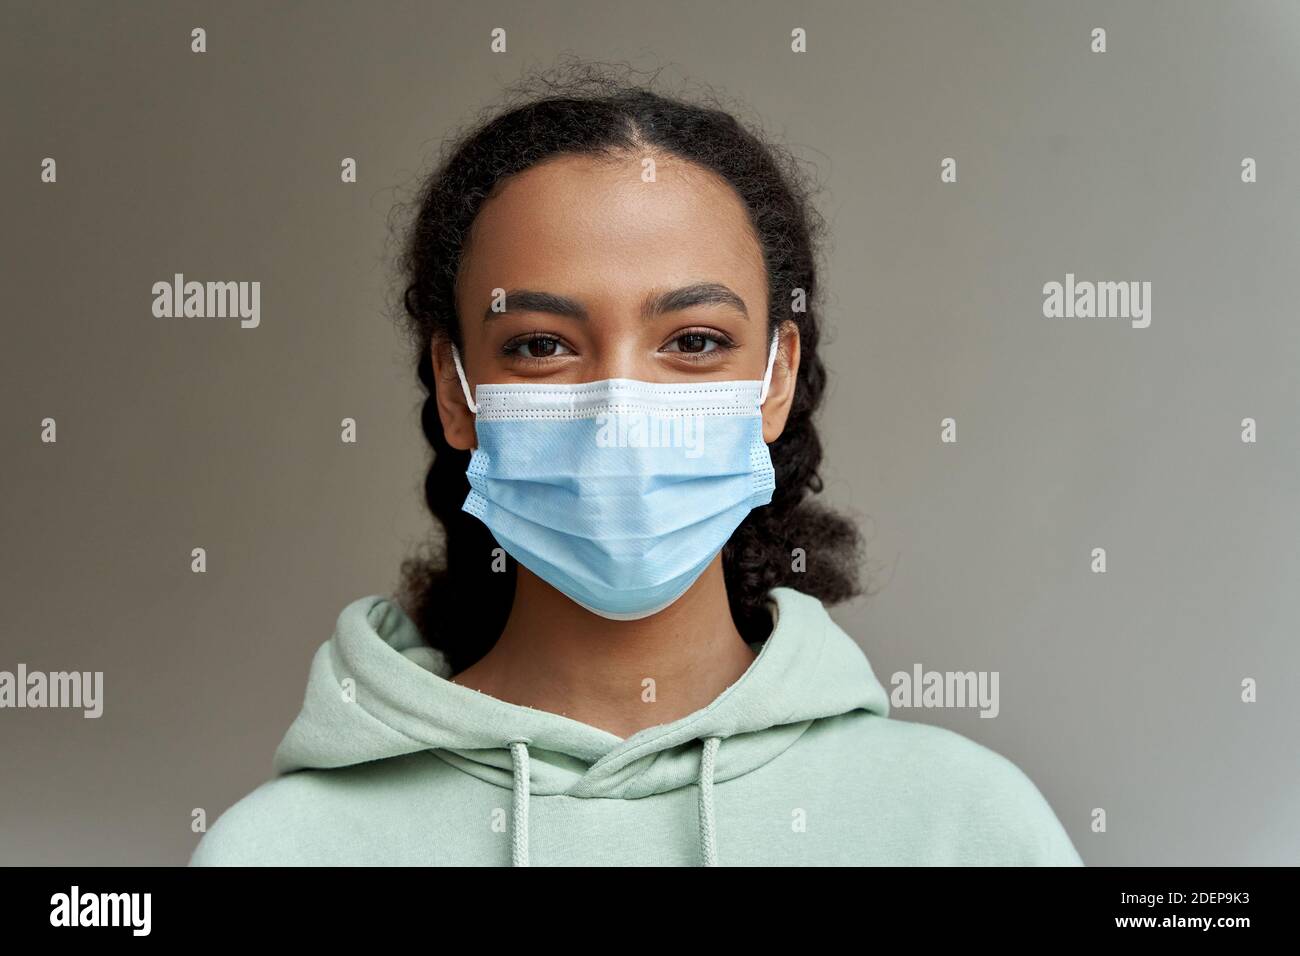 African american teen girl wearing face mask looking at camera, headshot. Stock Photo